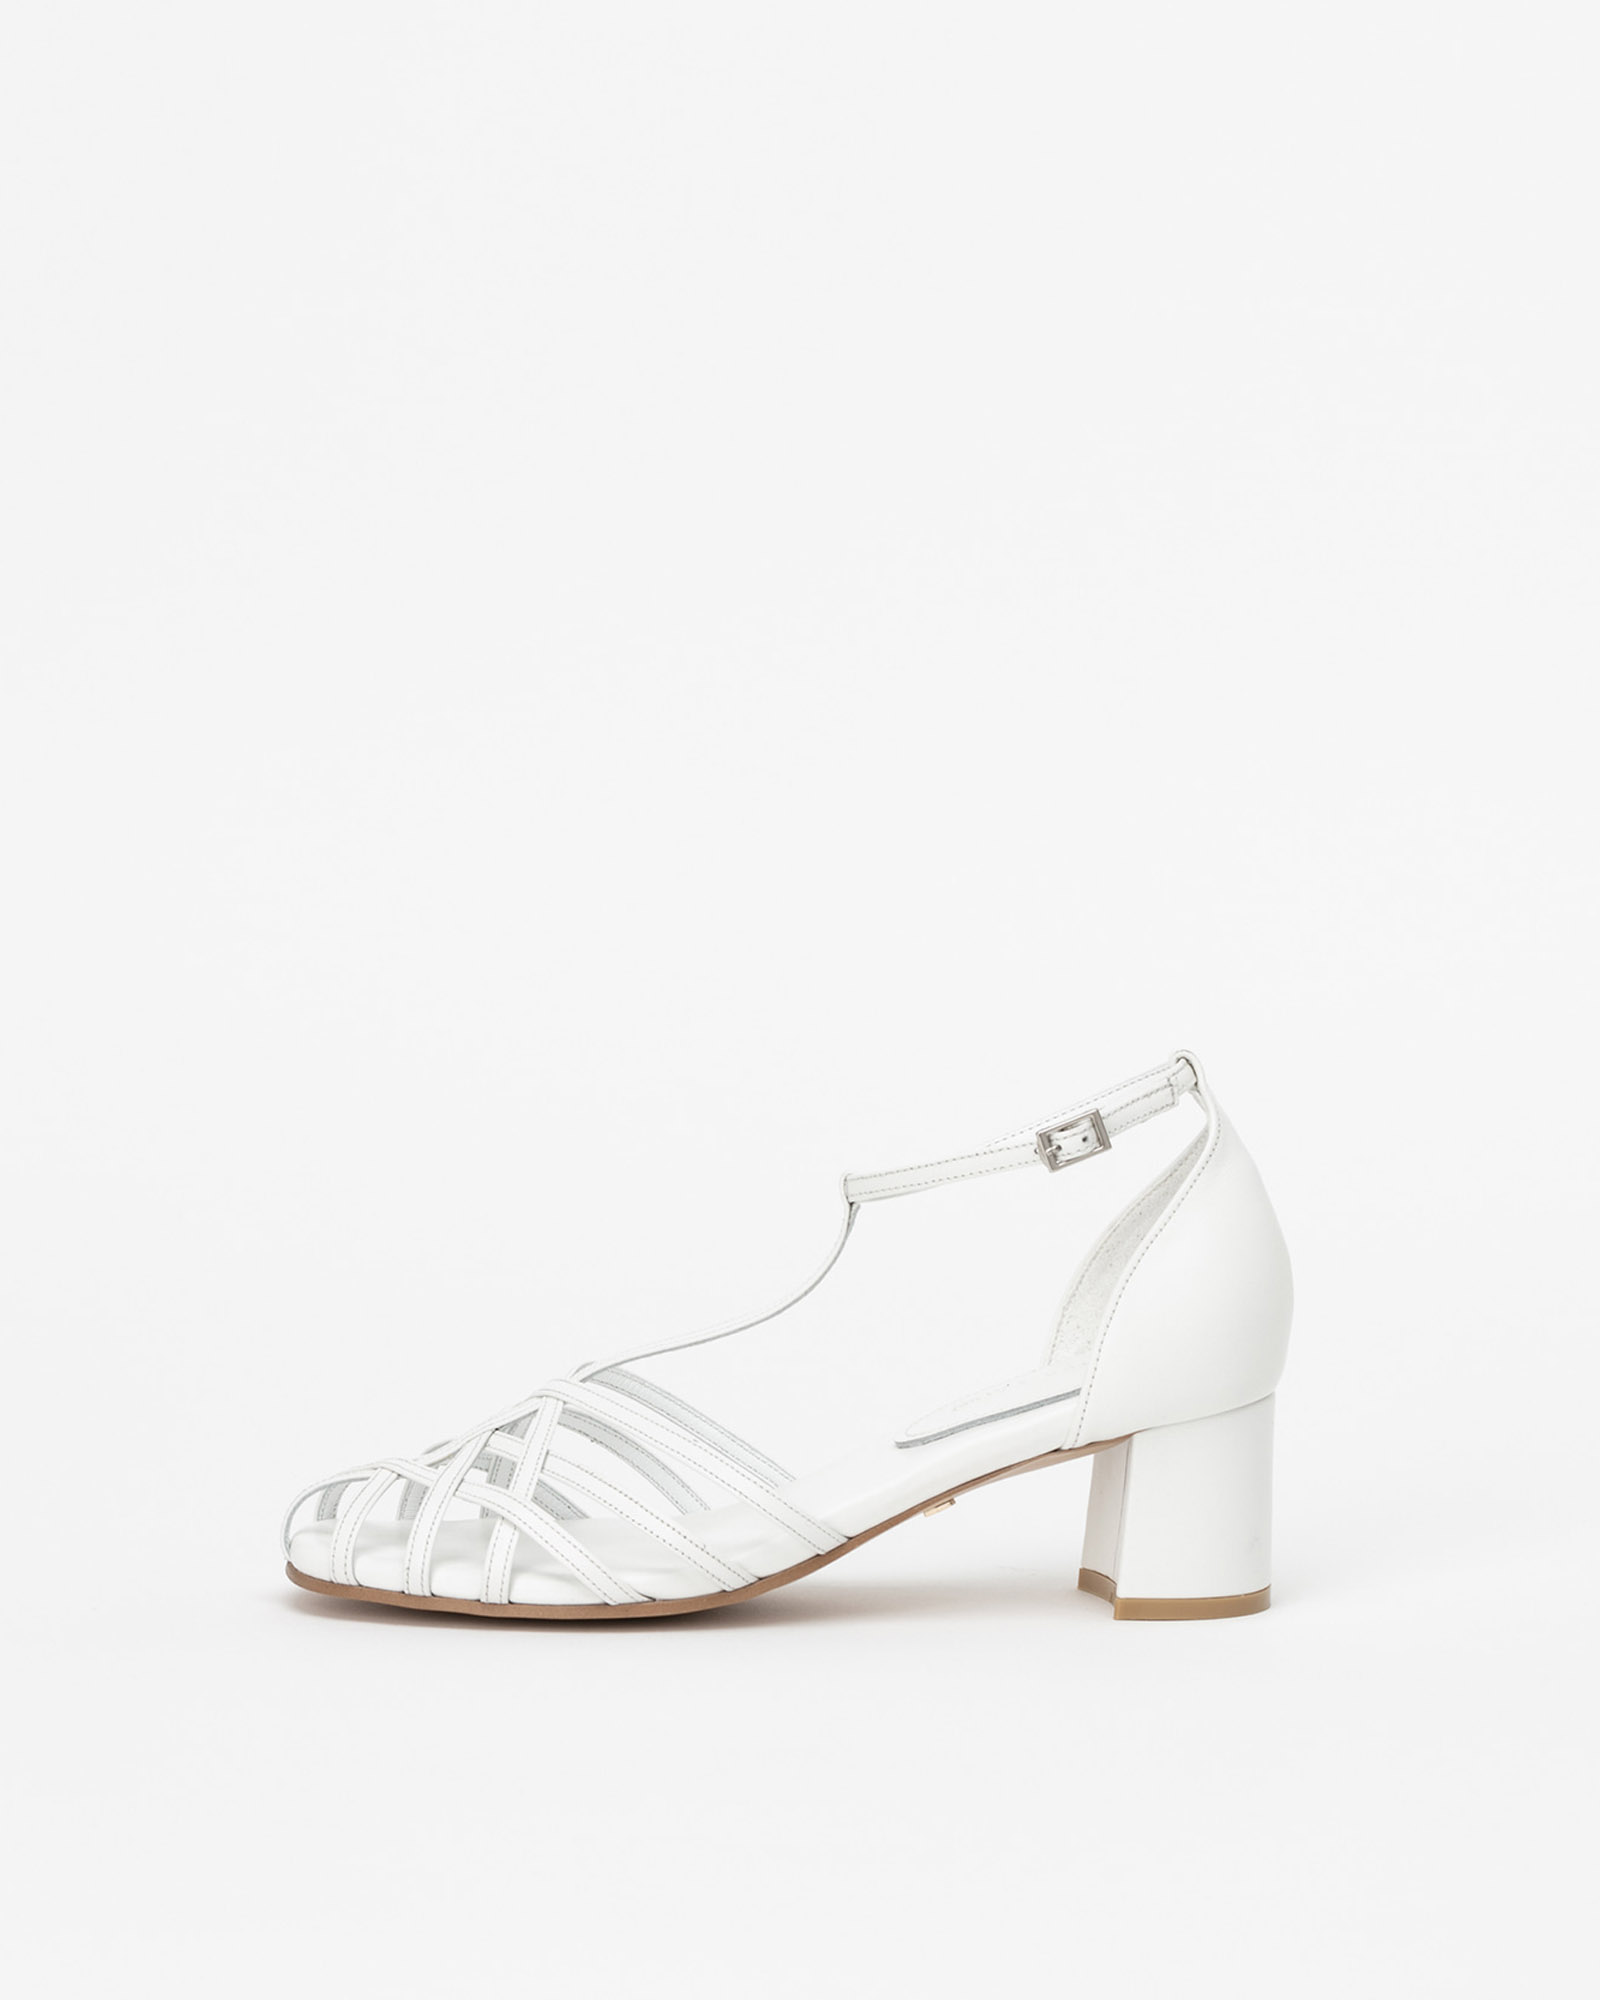 Chevon Gladiator Sandals in Pure White